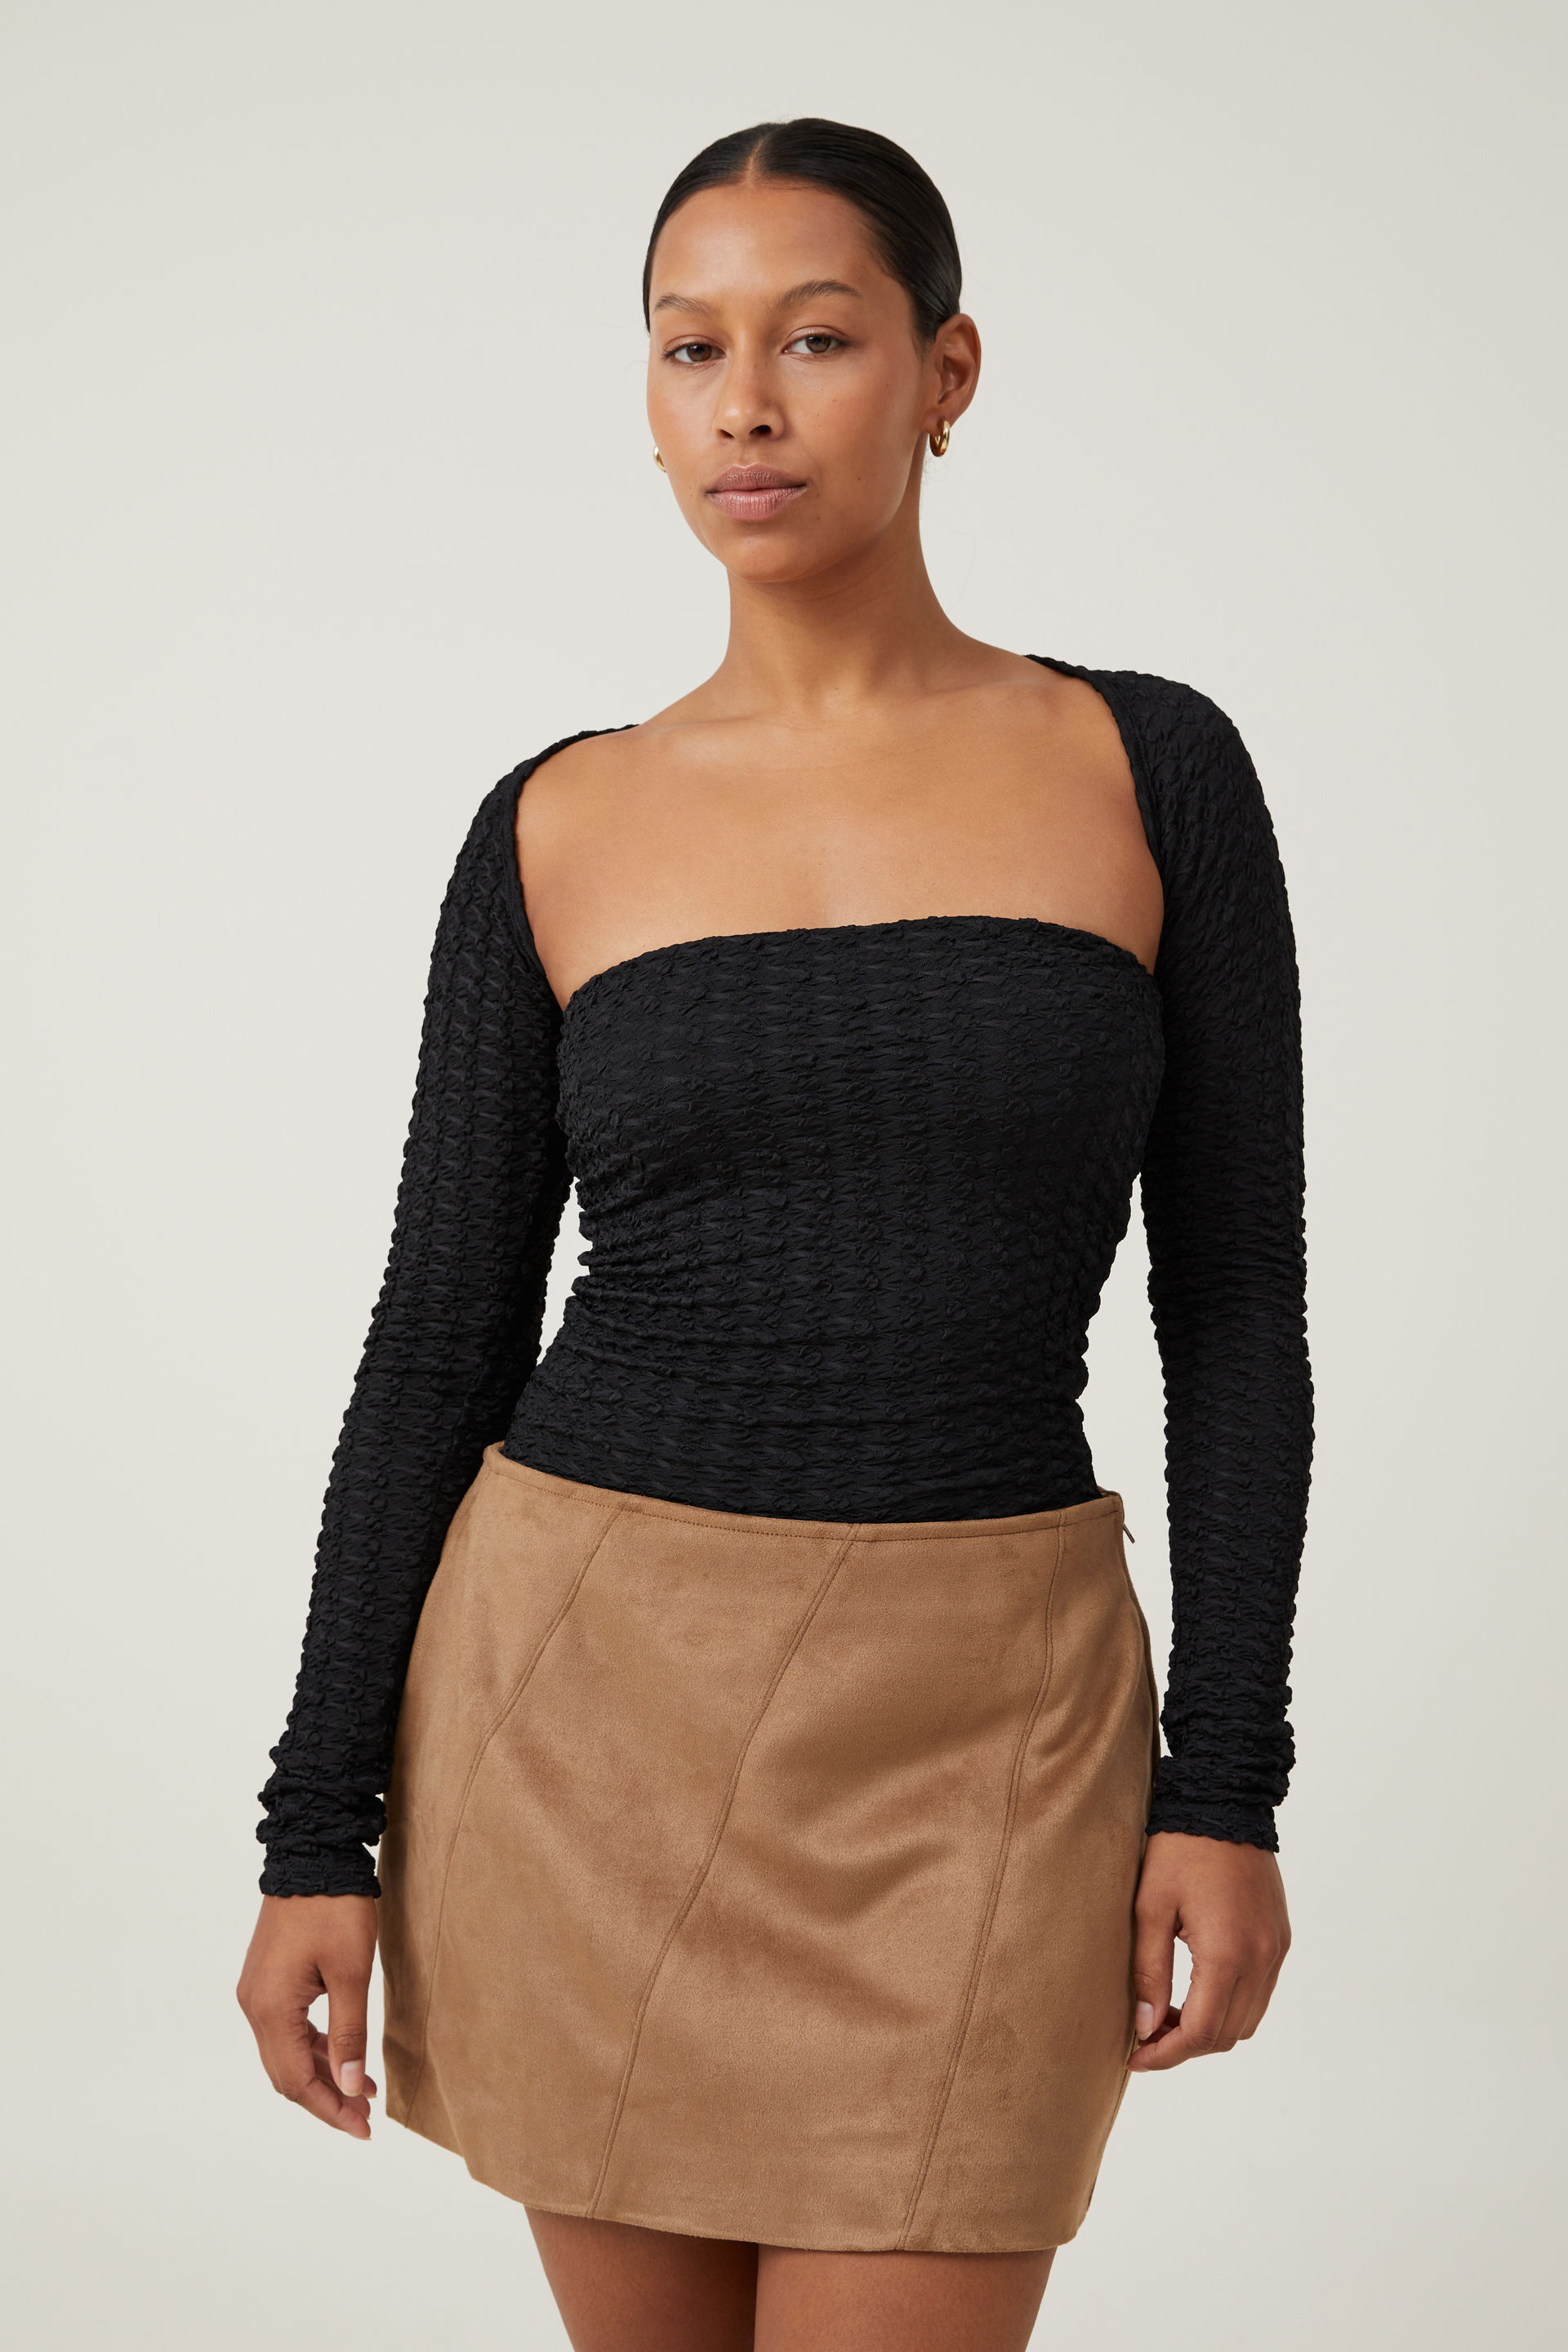 Cotton On Women - Nova Textured Long Sleeve Shrug - Black